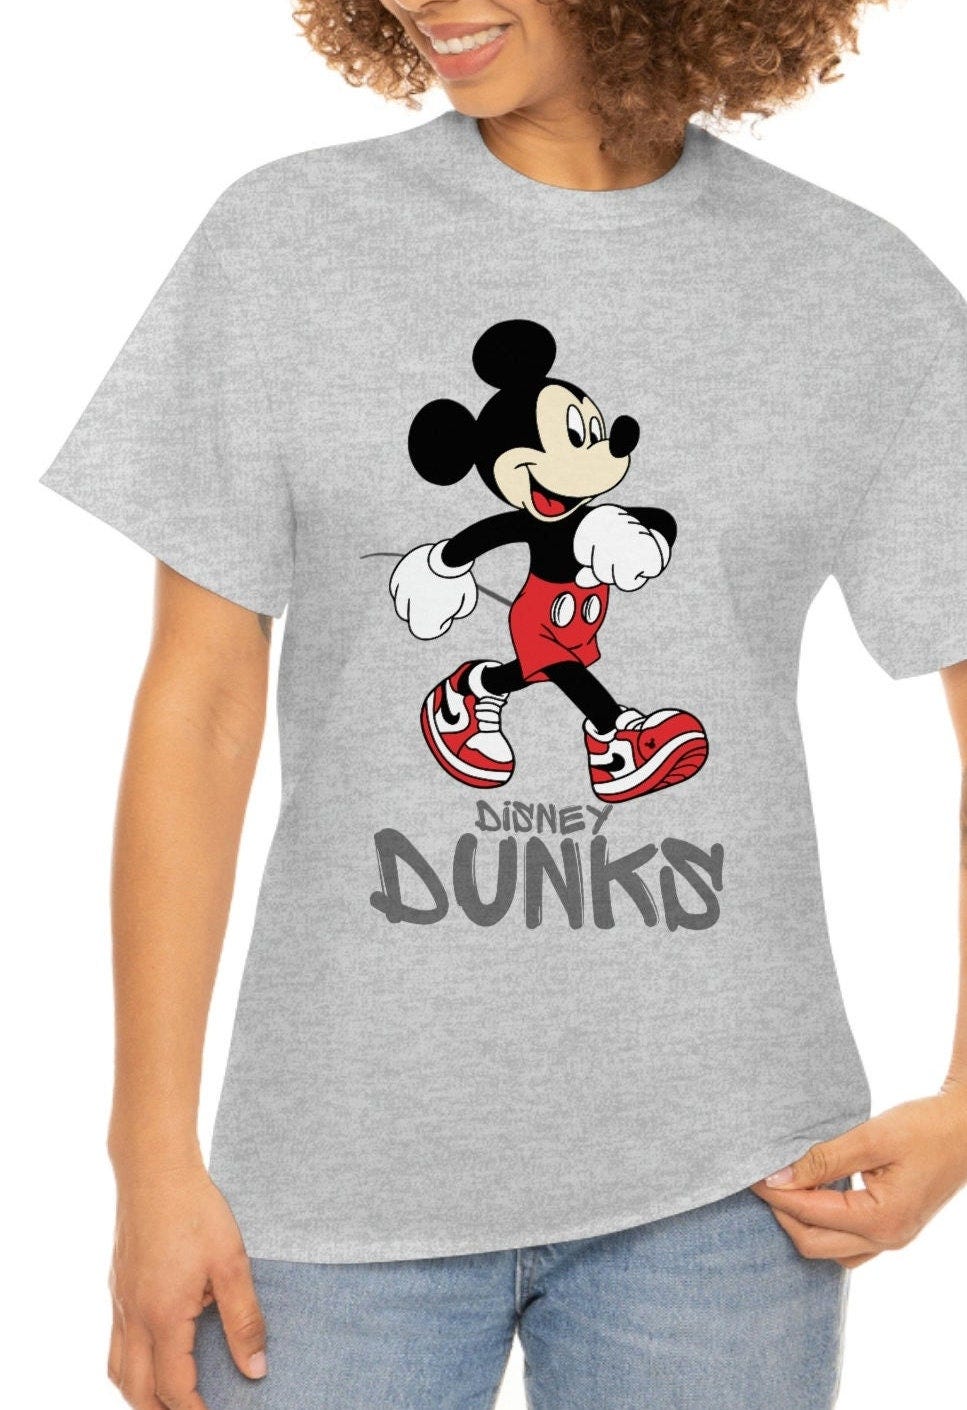 Mickey Mouse t-shirt-Disney Dunks t-shirt-Cool Mickey Mouse t-shirt-Disney Family Vacation t-shirt-Mickey Mouse Dunks t-shirt-Trendy Mickey